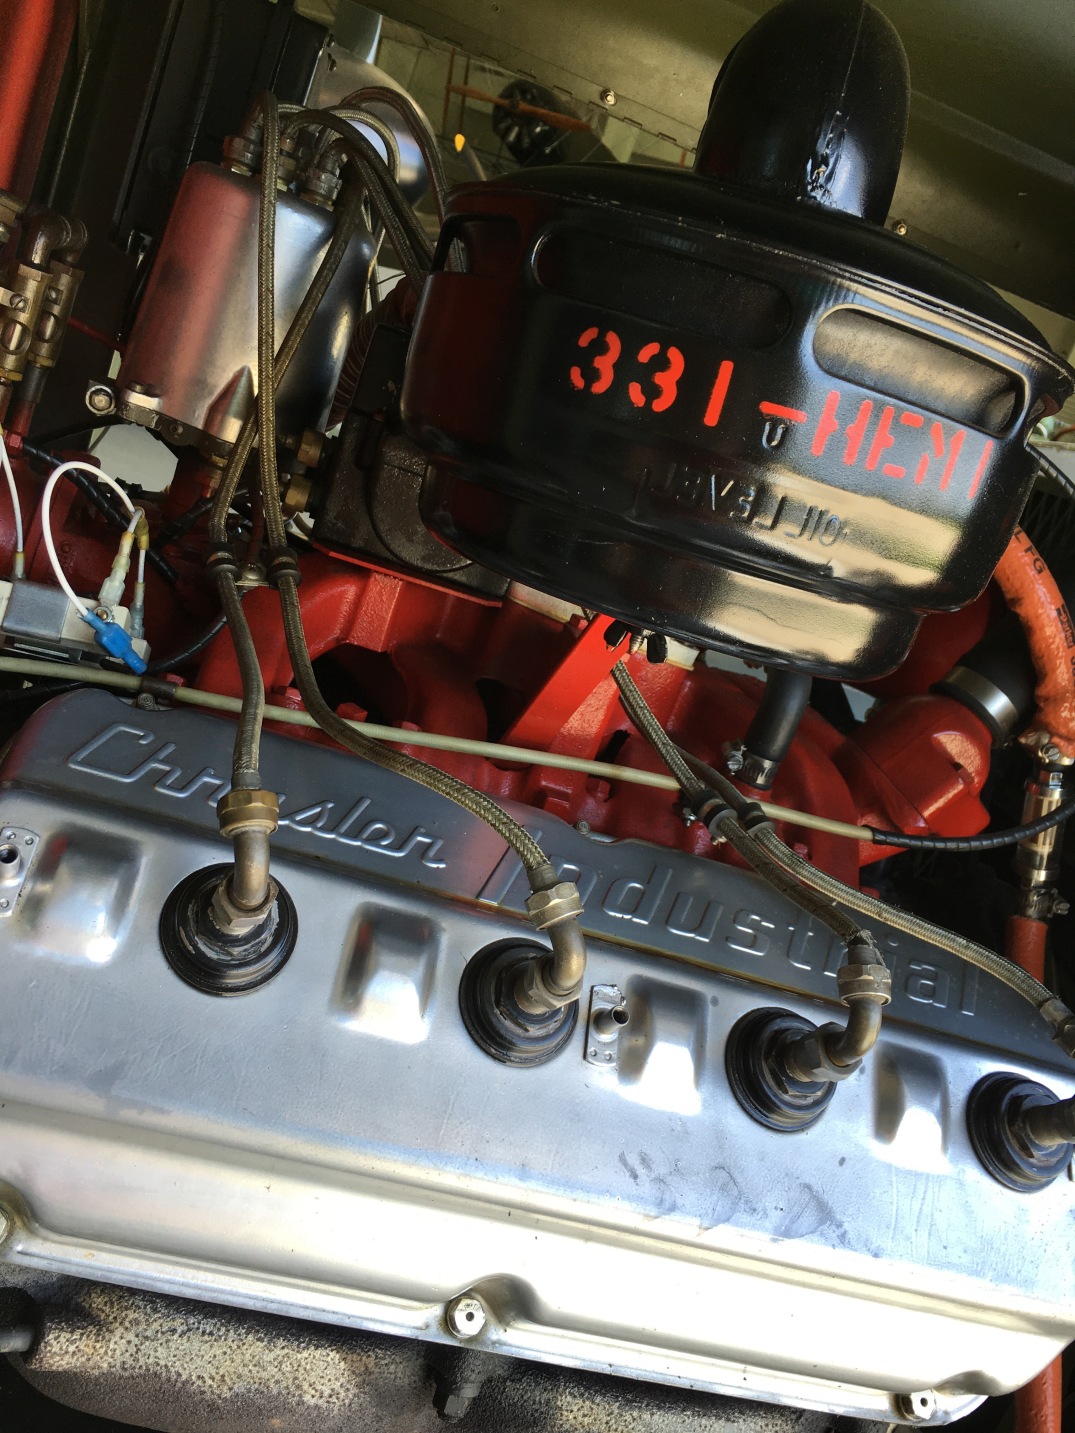 Chrysler 331 hemi engine